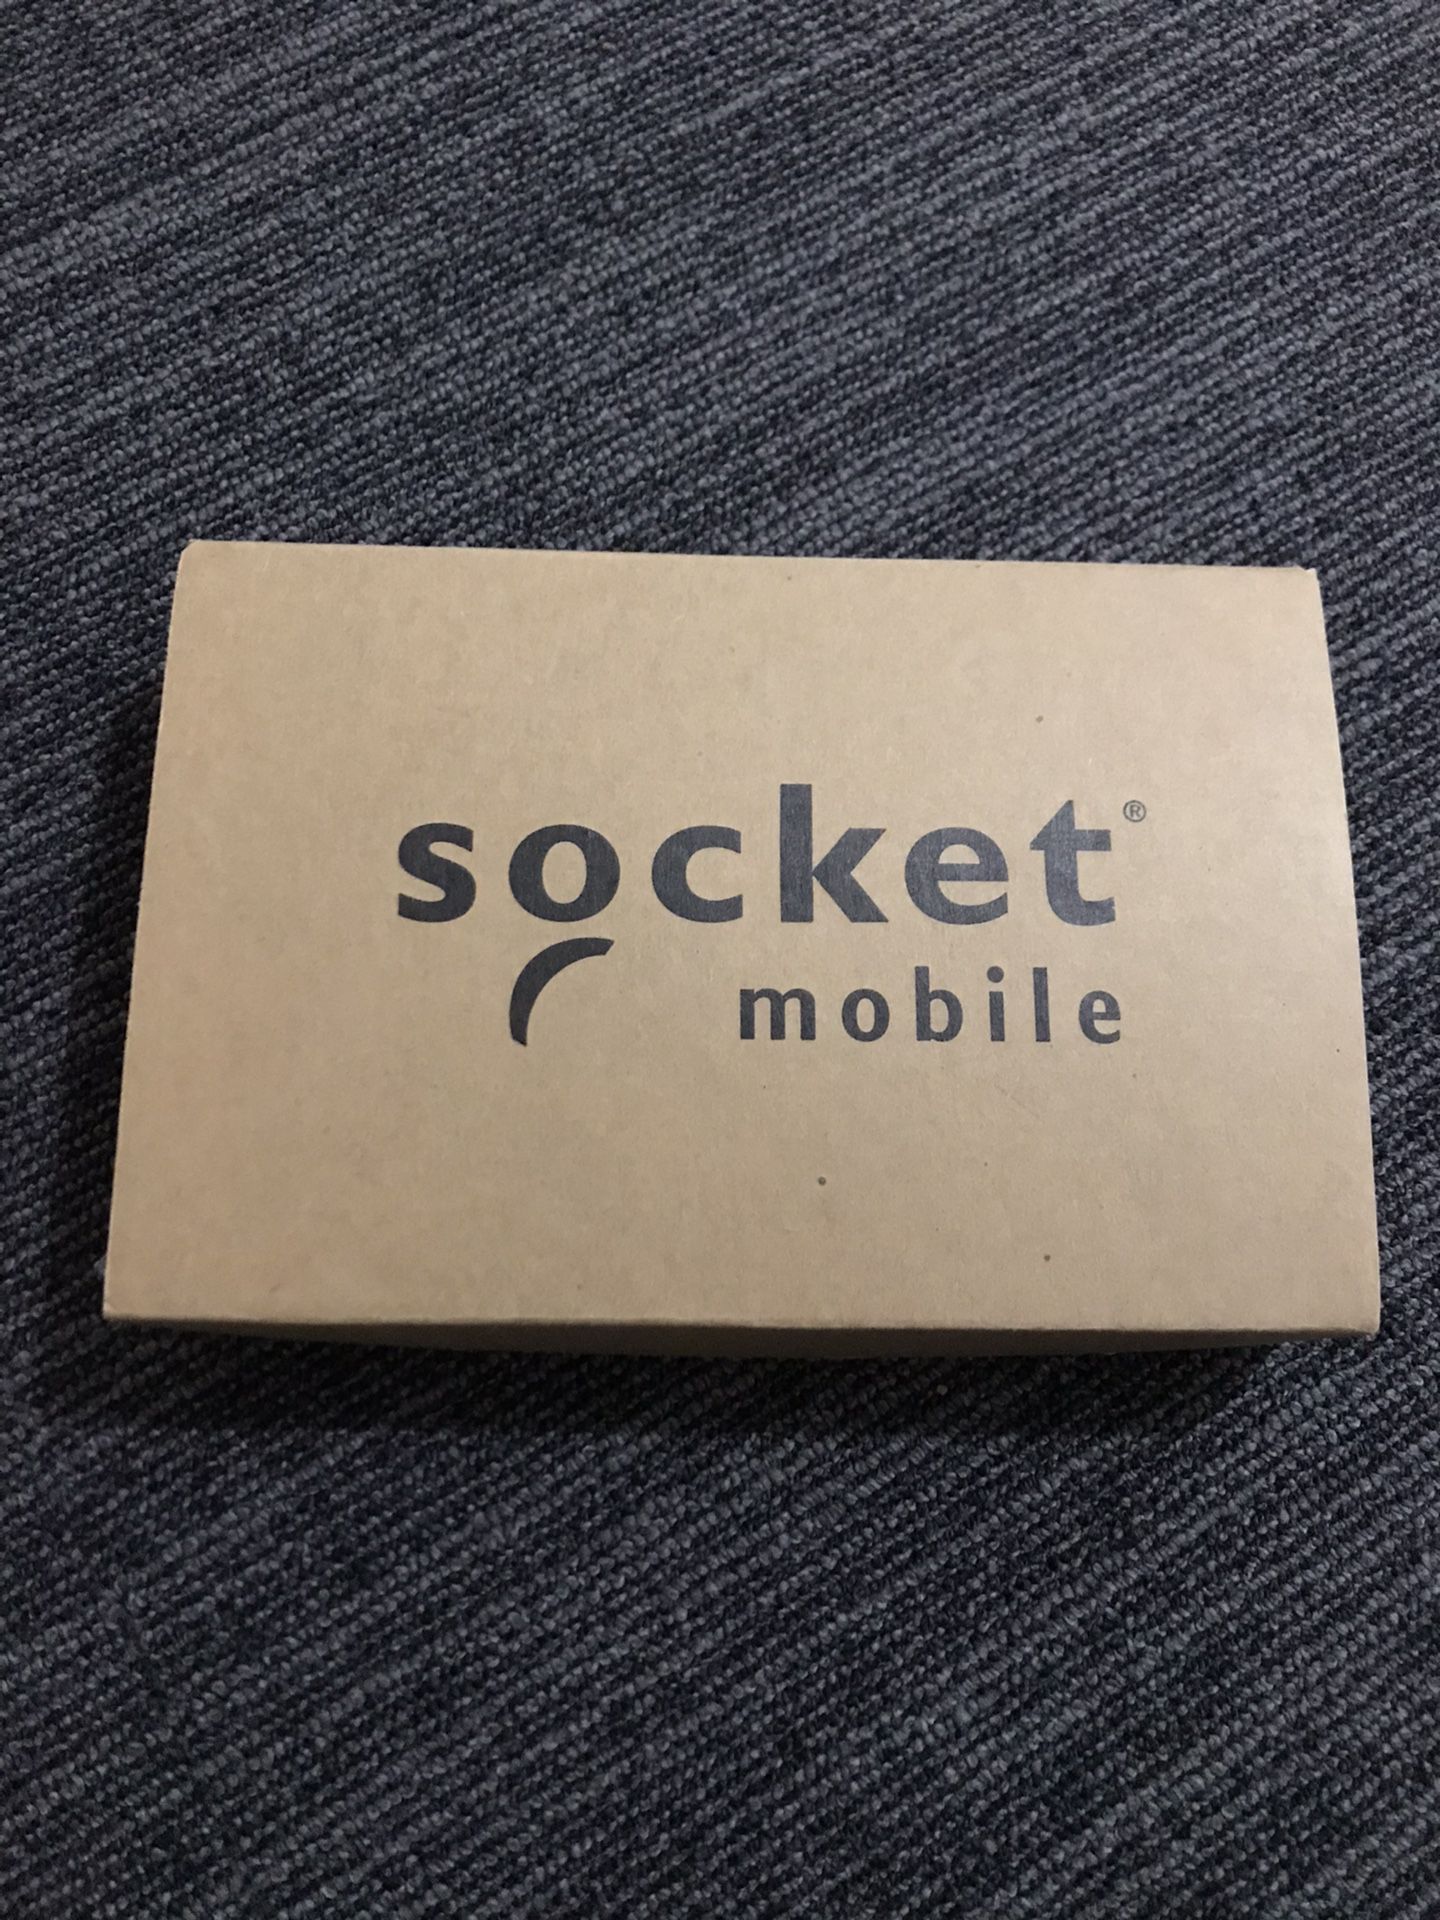 Socket Mobile CHS 7Ci Bluetooth 1D Imager Barcode Scanner